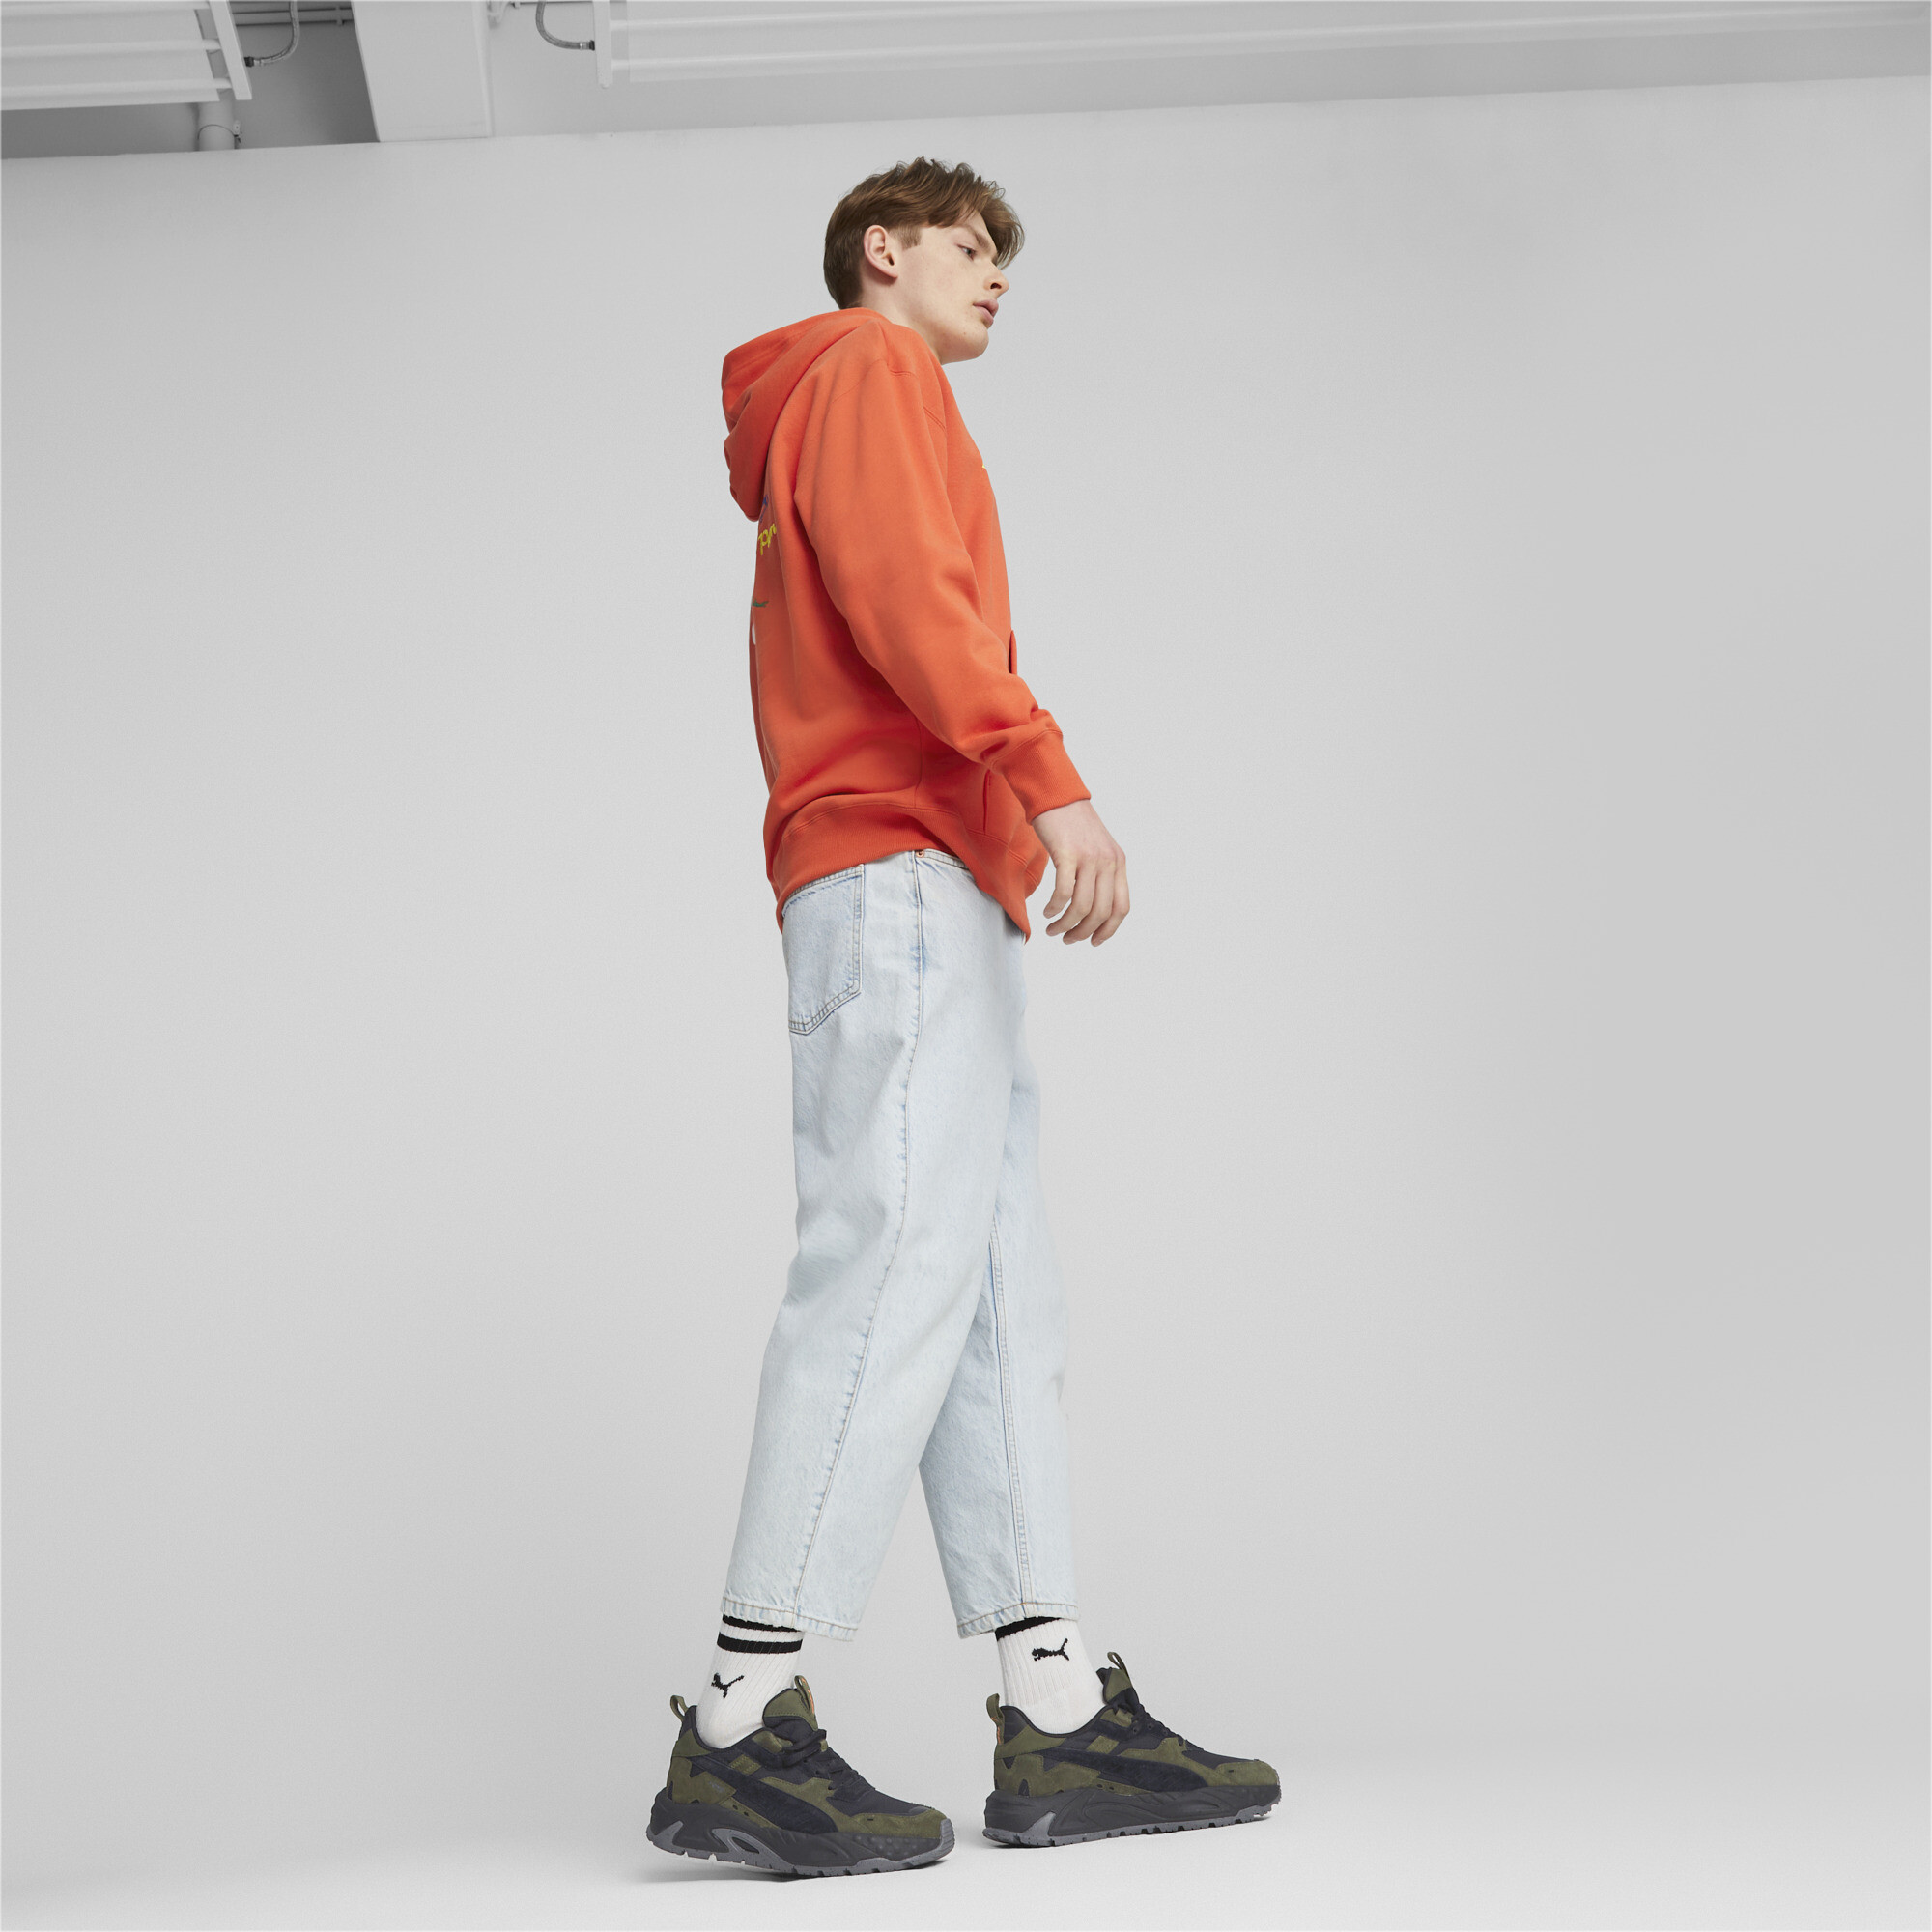 Men's PUMA RS-Trck Outdoor Sneakers In 30 - Gray, Size EU 39